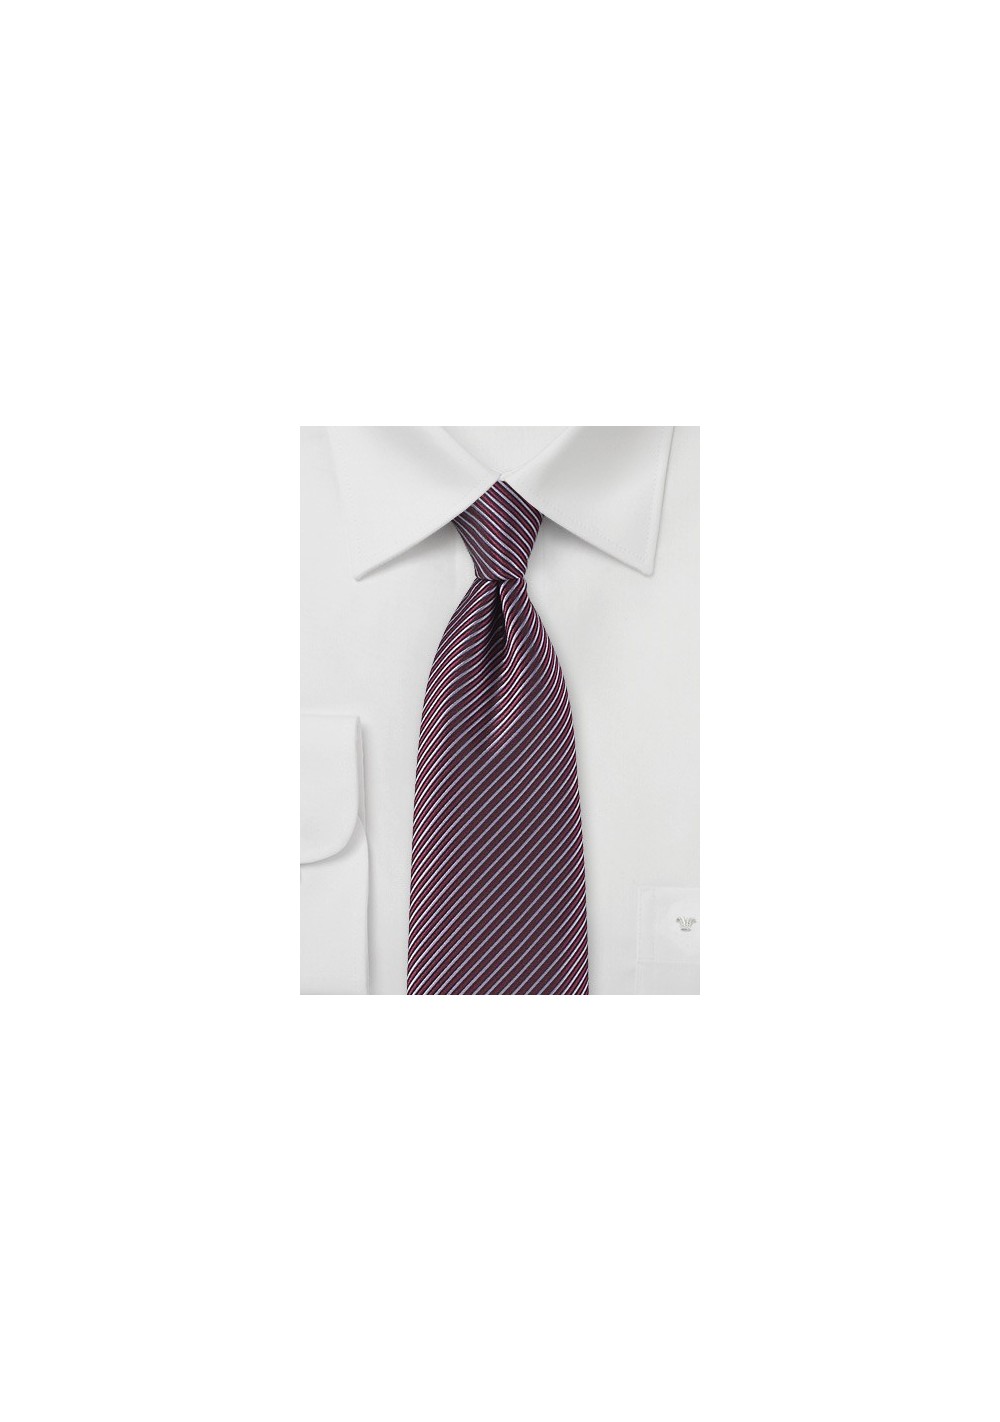 Stripe Tie in Mauve, Burgundy, and Black